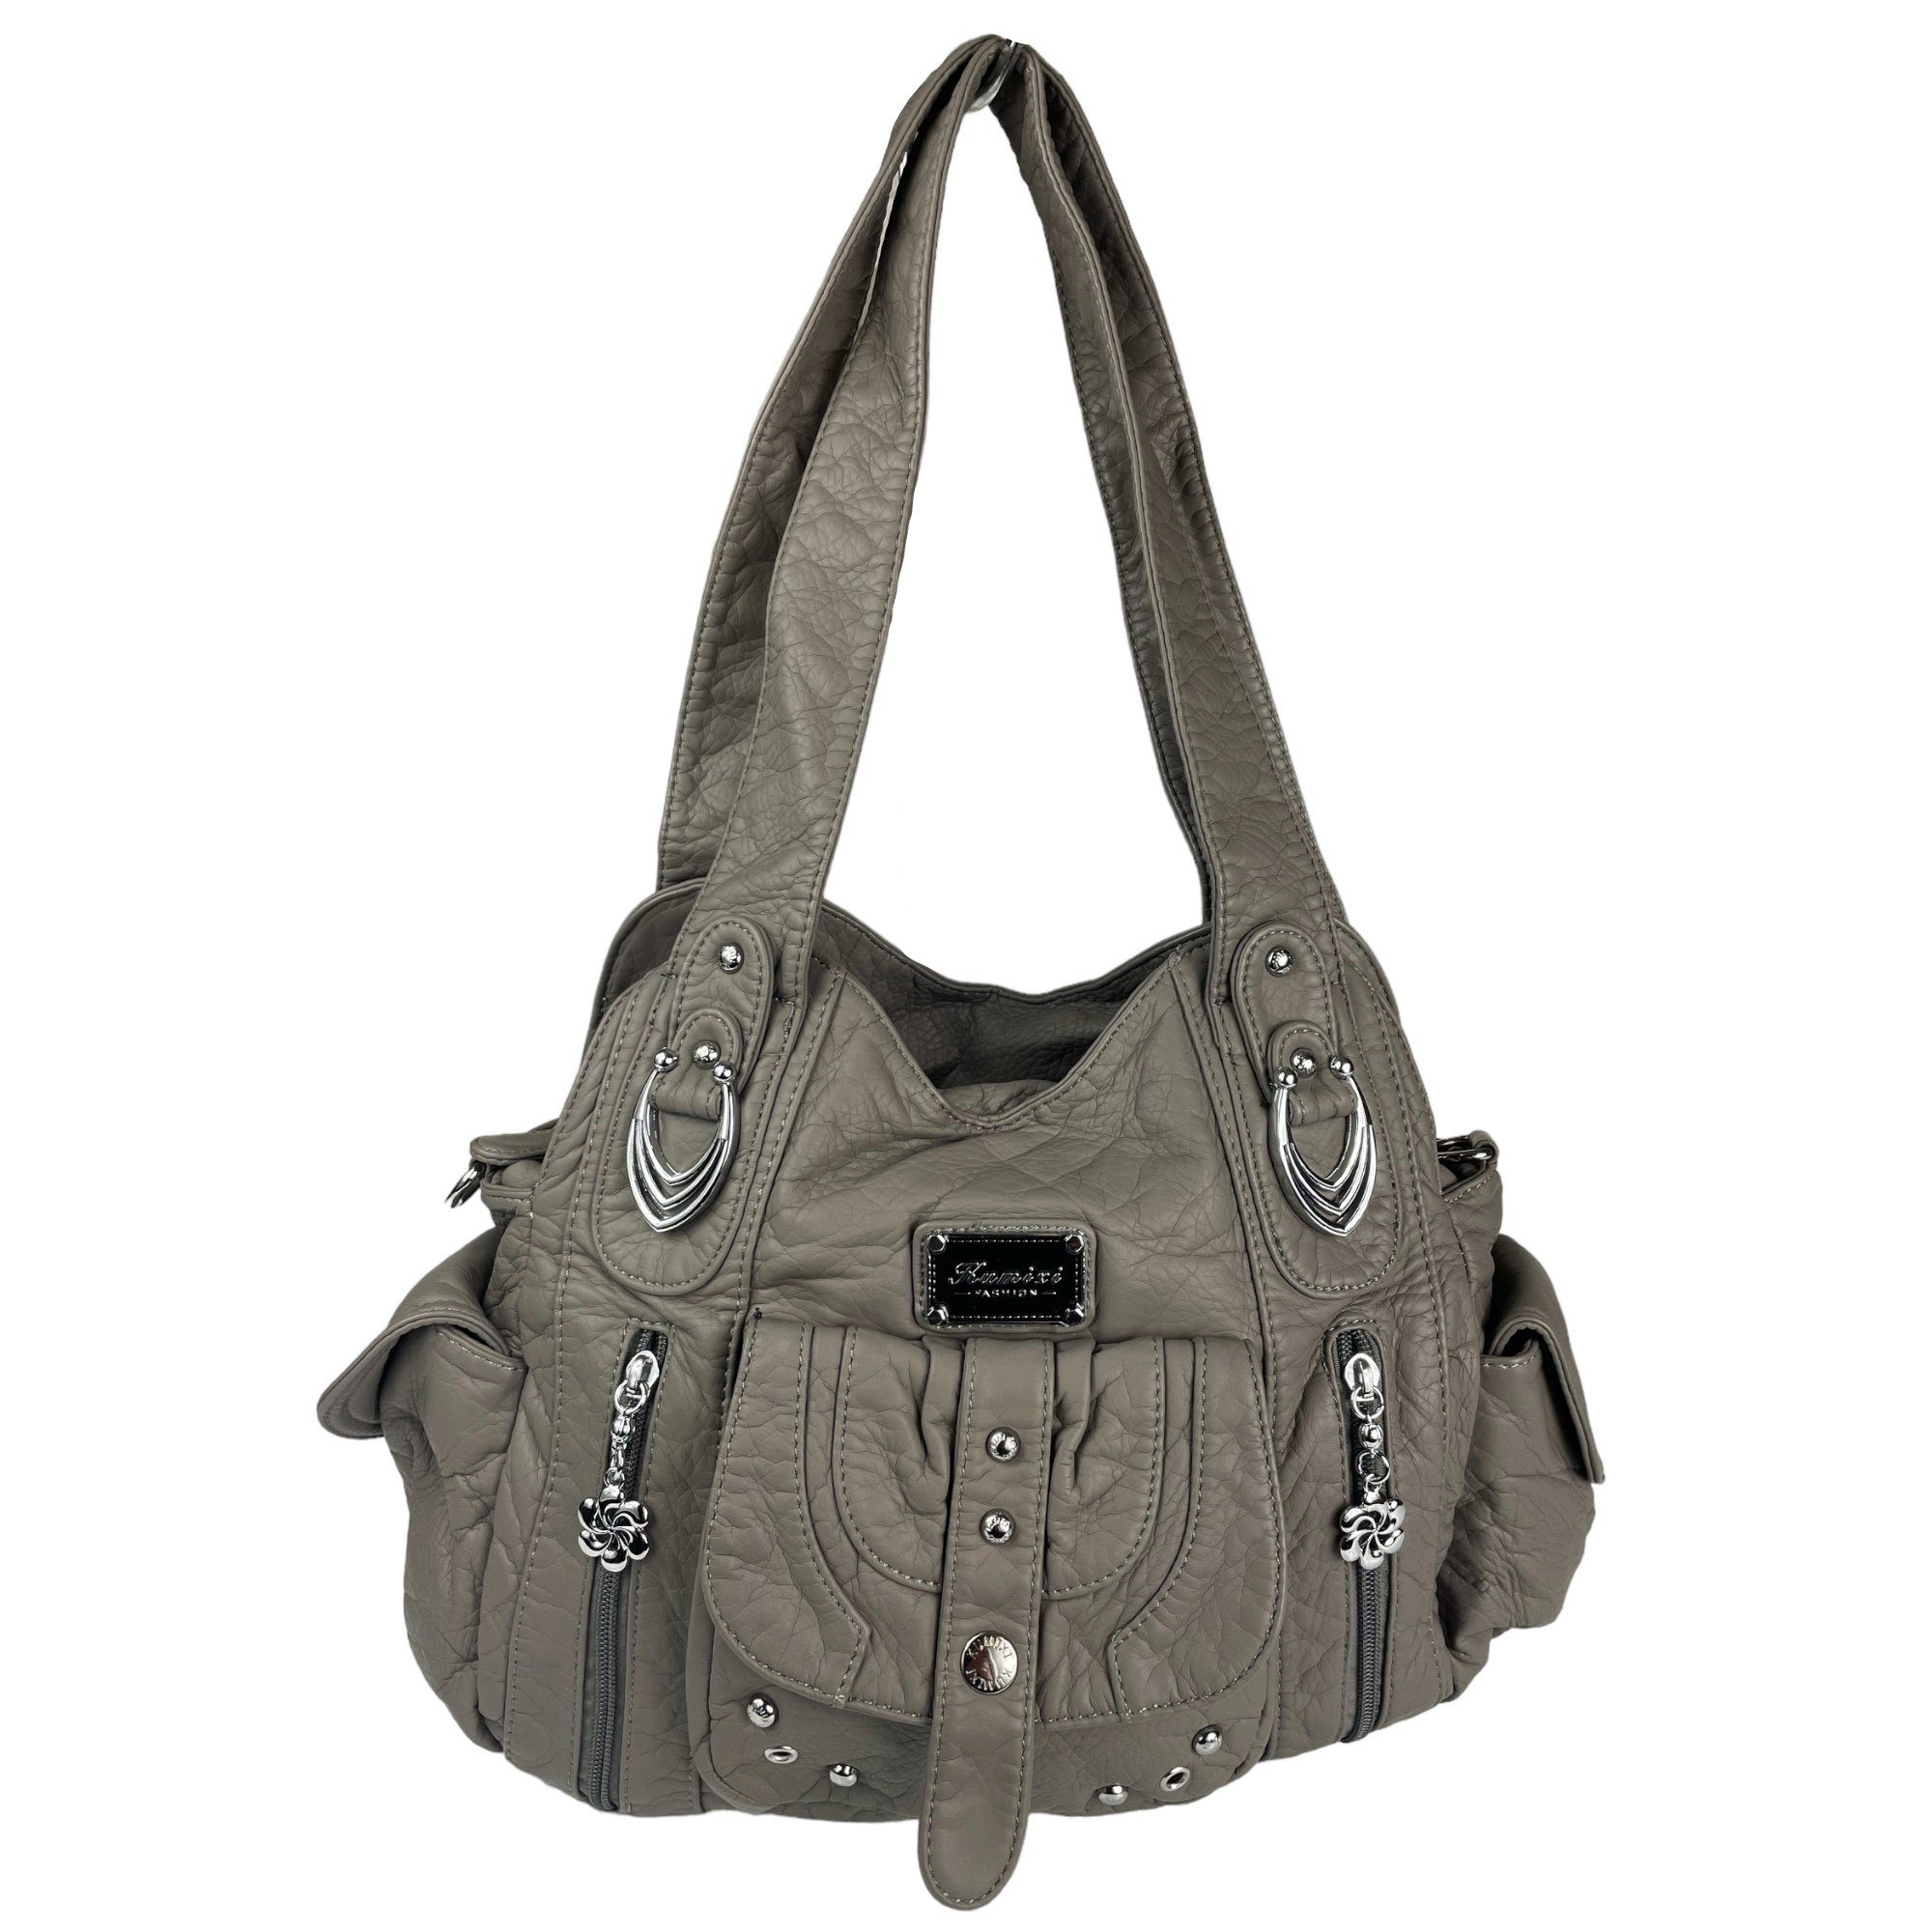 Taschen4life Schultertasche Damen Handtasche AKW22026, lange Tragegriffe & abnehmbarer Schulterriemen, Schultertasche grau | Schultertaschen